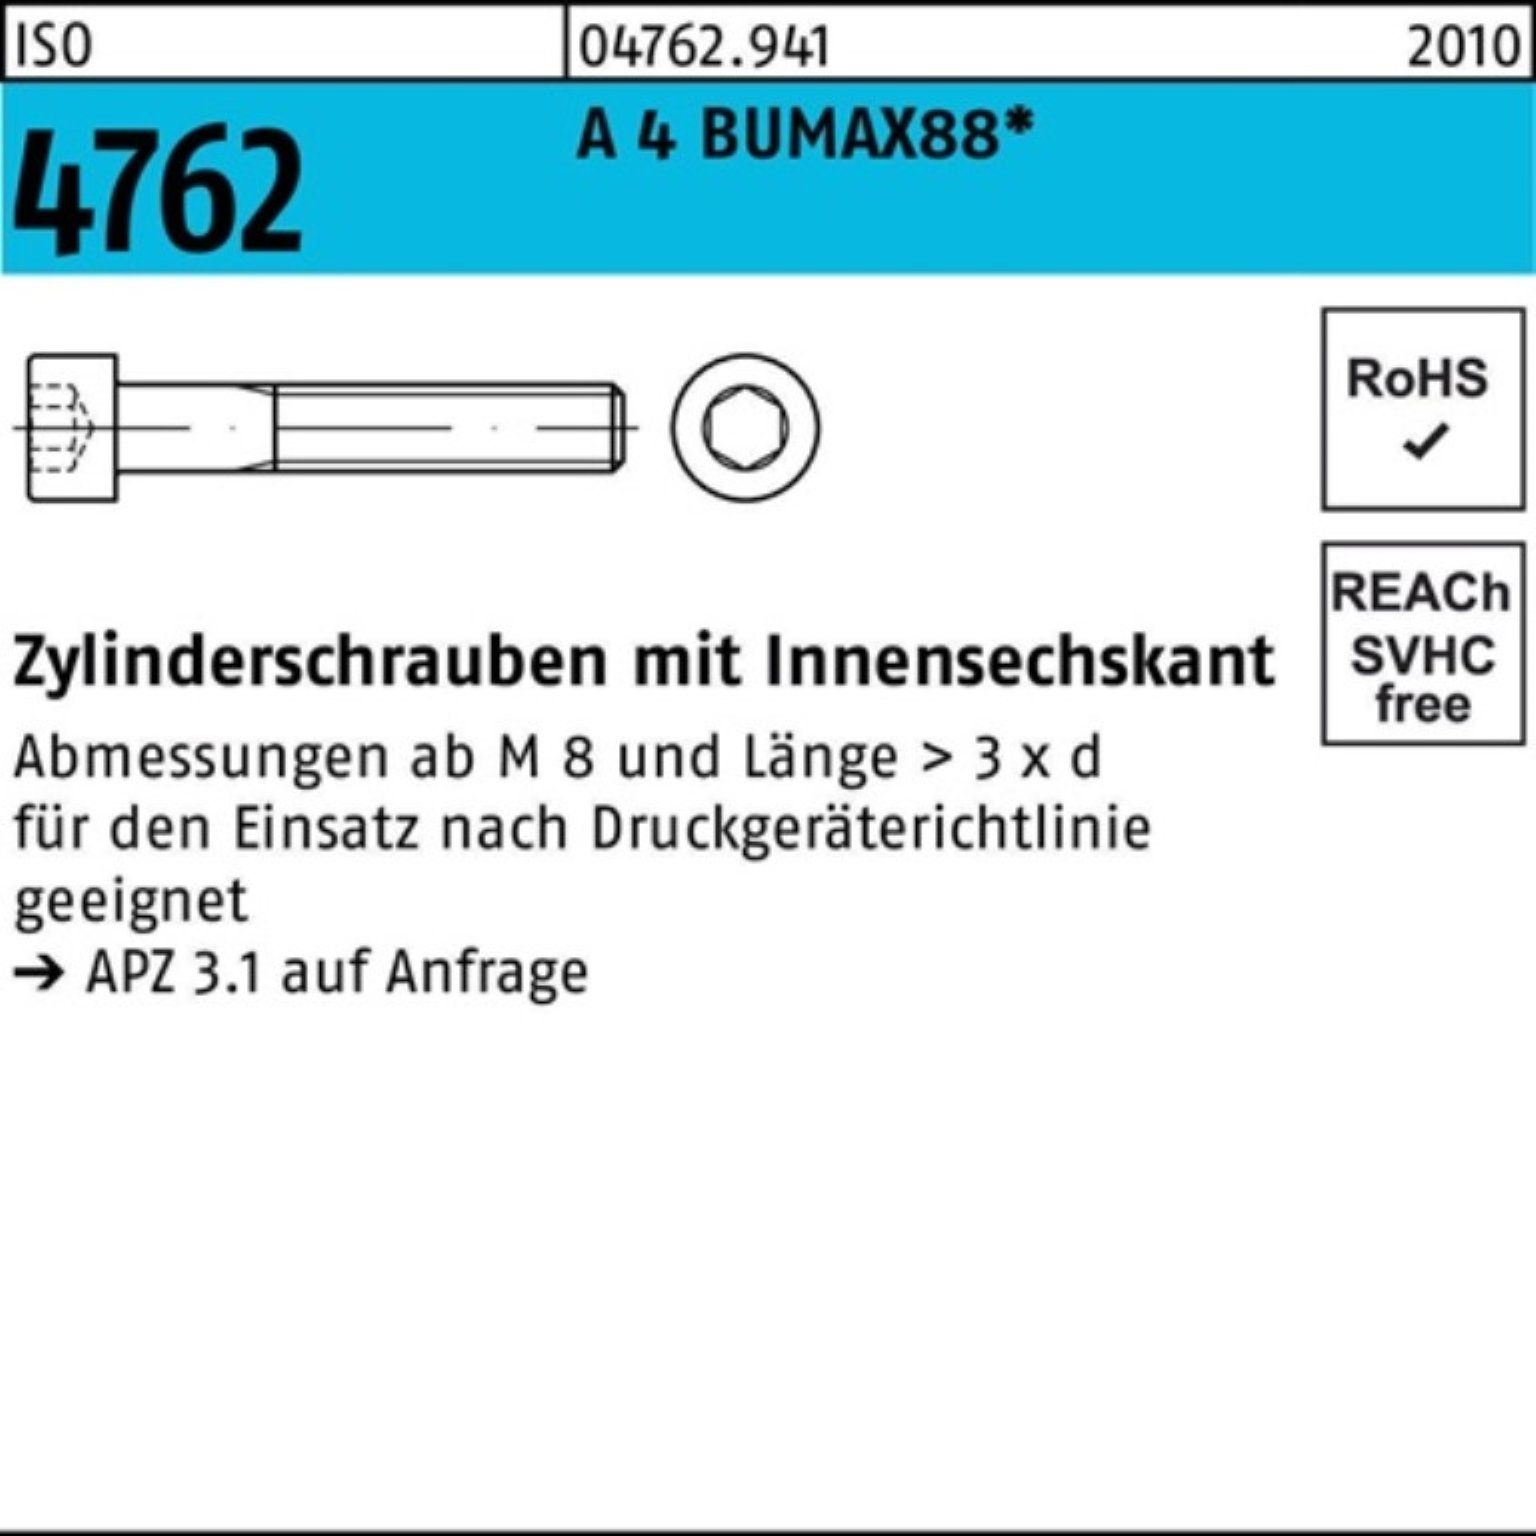 Bufab Zylinderschraube 100er Pack Zylinderschraube ISO 4762 Innen-6kt M8x 16 A 4 BUMAX88 50 S